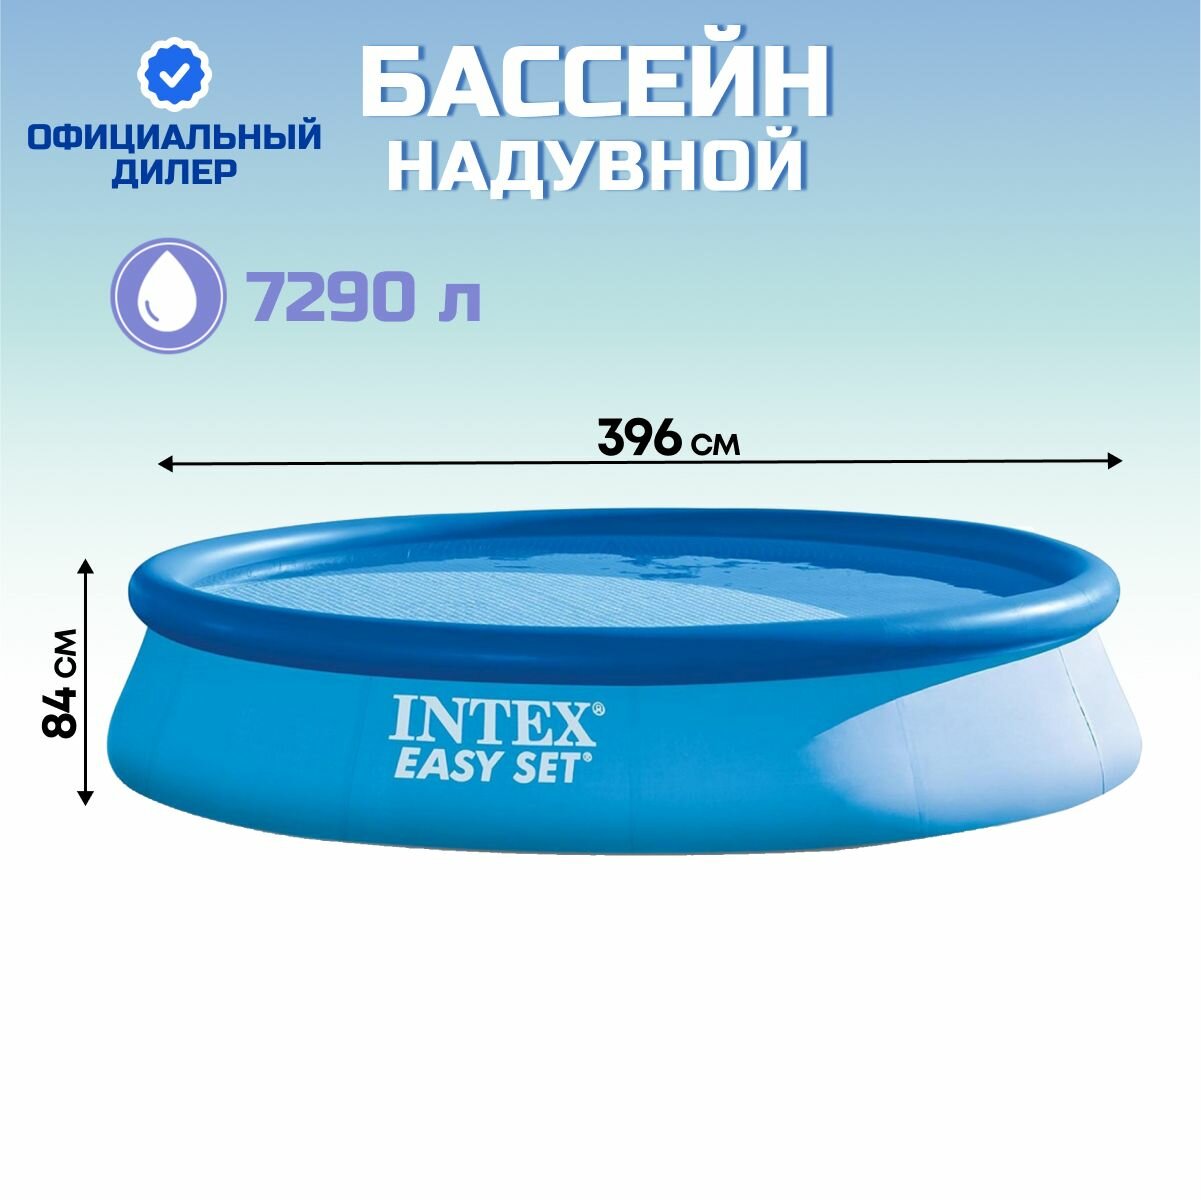 Бассейн надувной Intex, Easy Set, 396х84 см, 7290 л